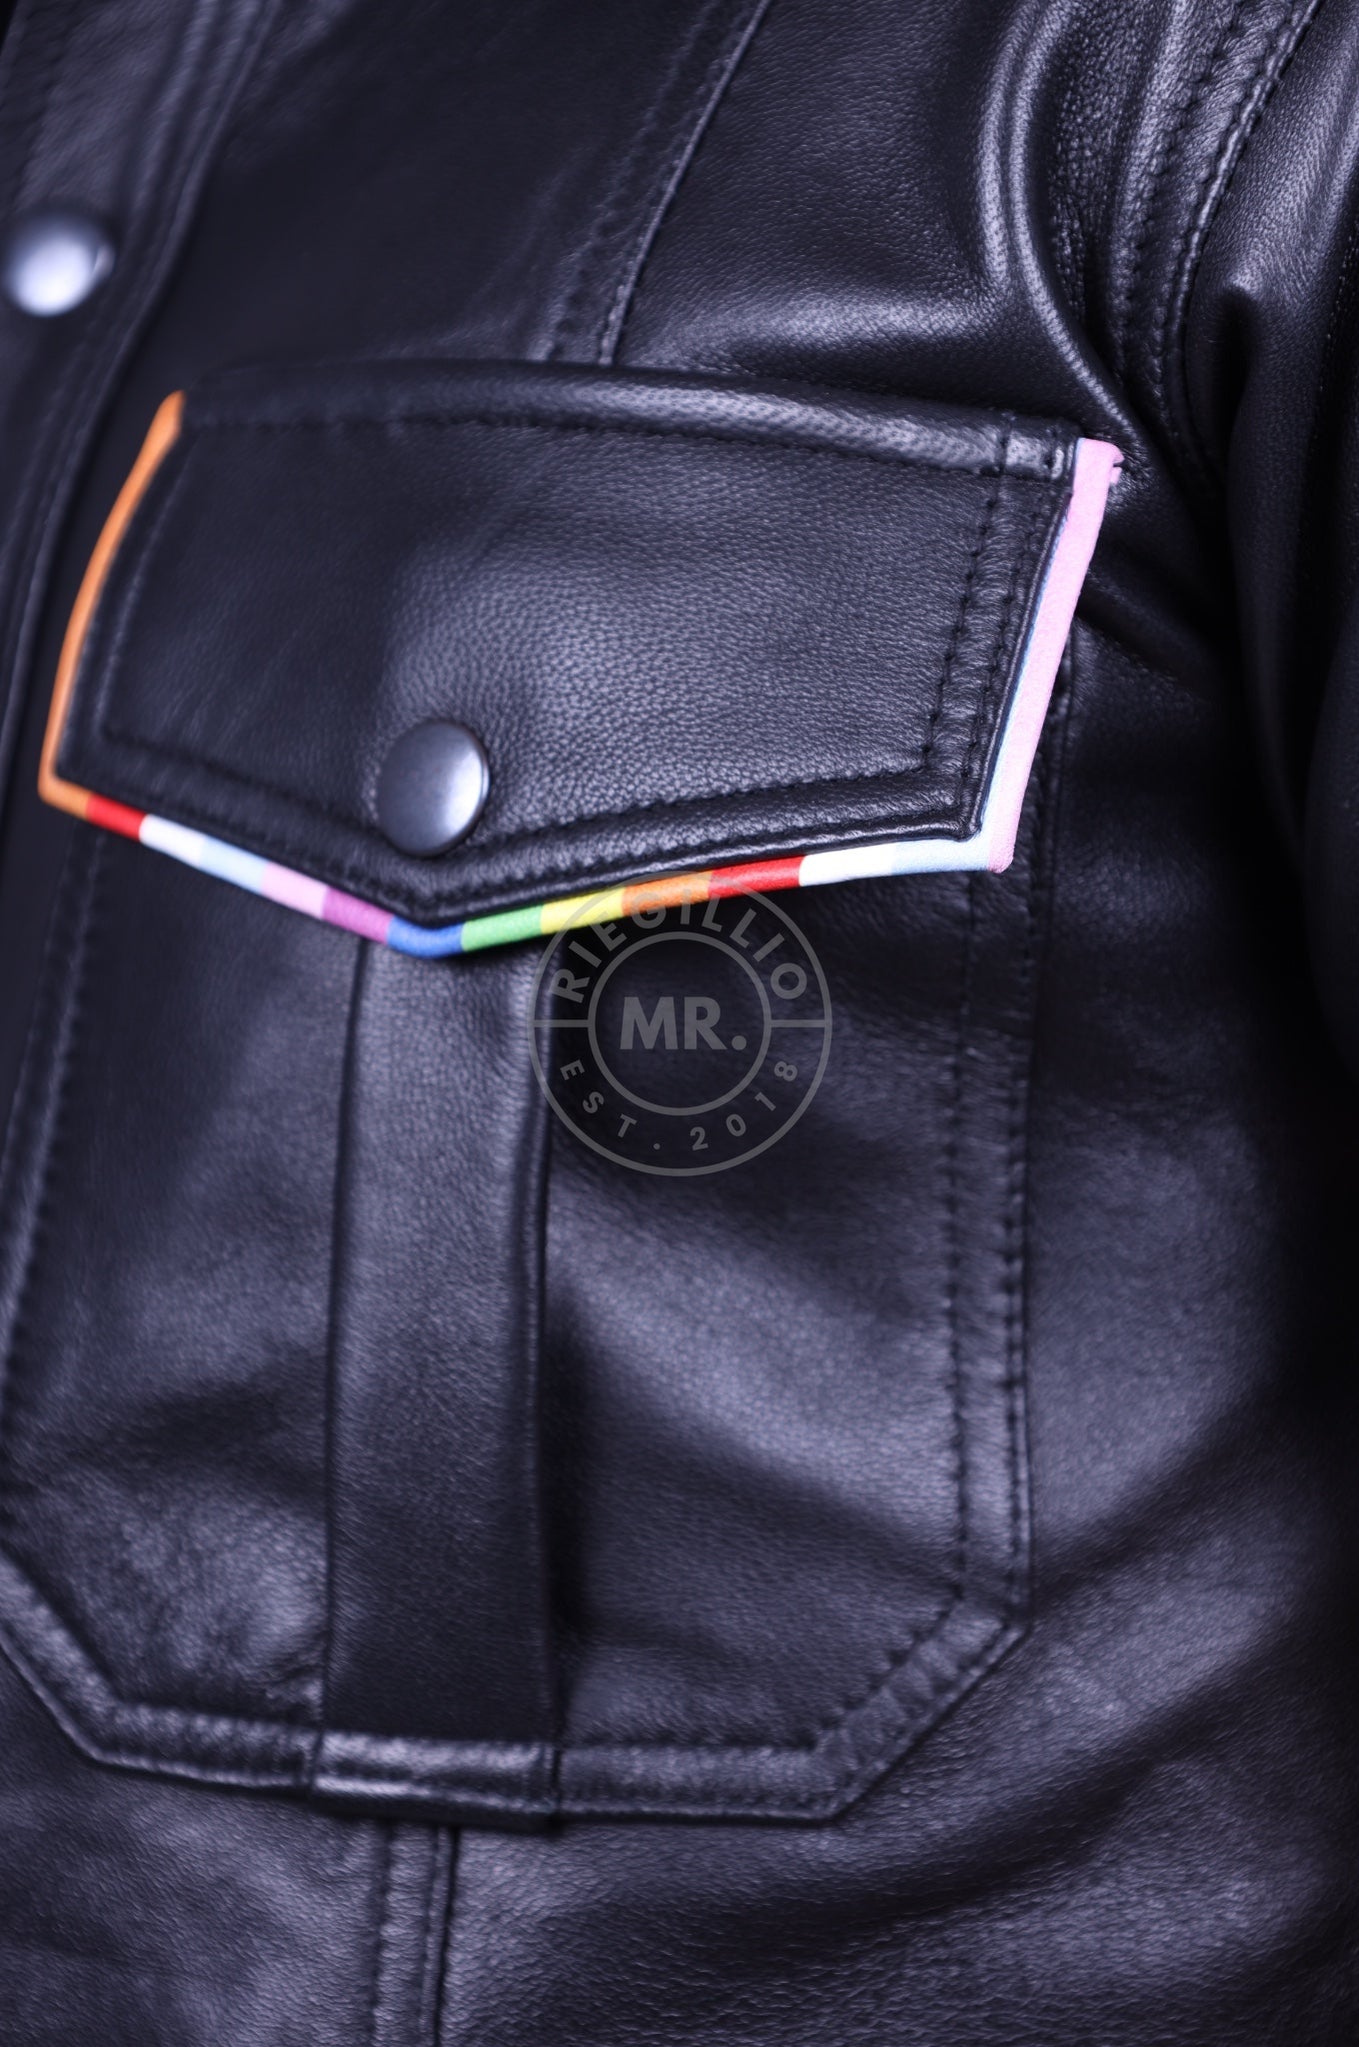 Black Leather Utility Jacket - Men - Size: 3XL / Black - Mr. Riegillio